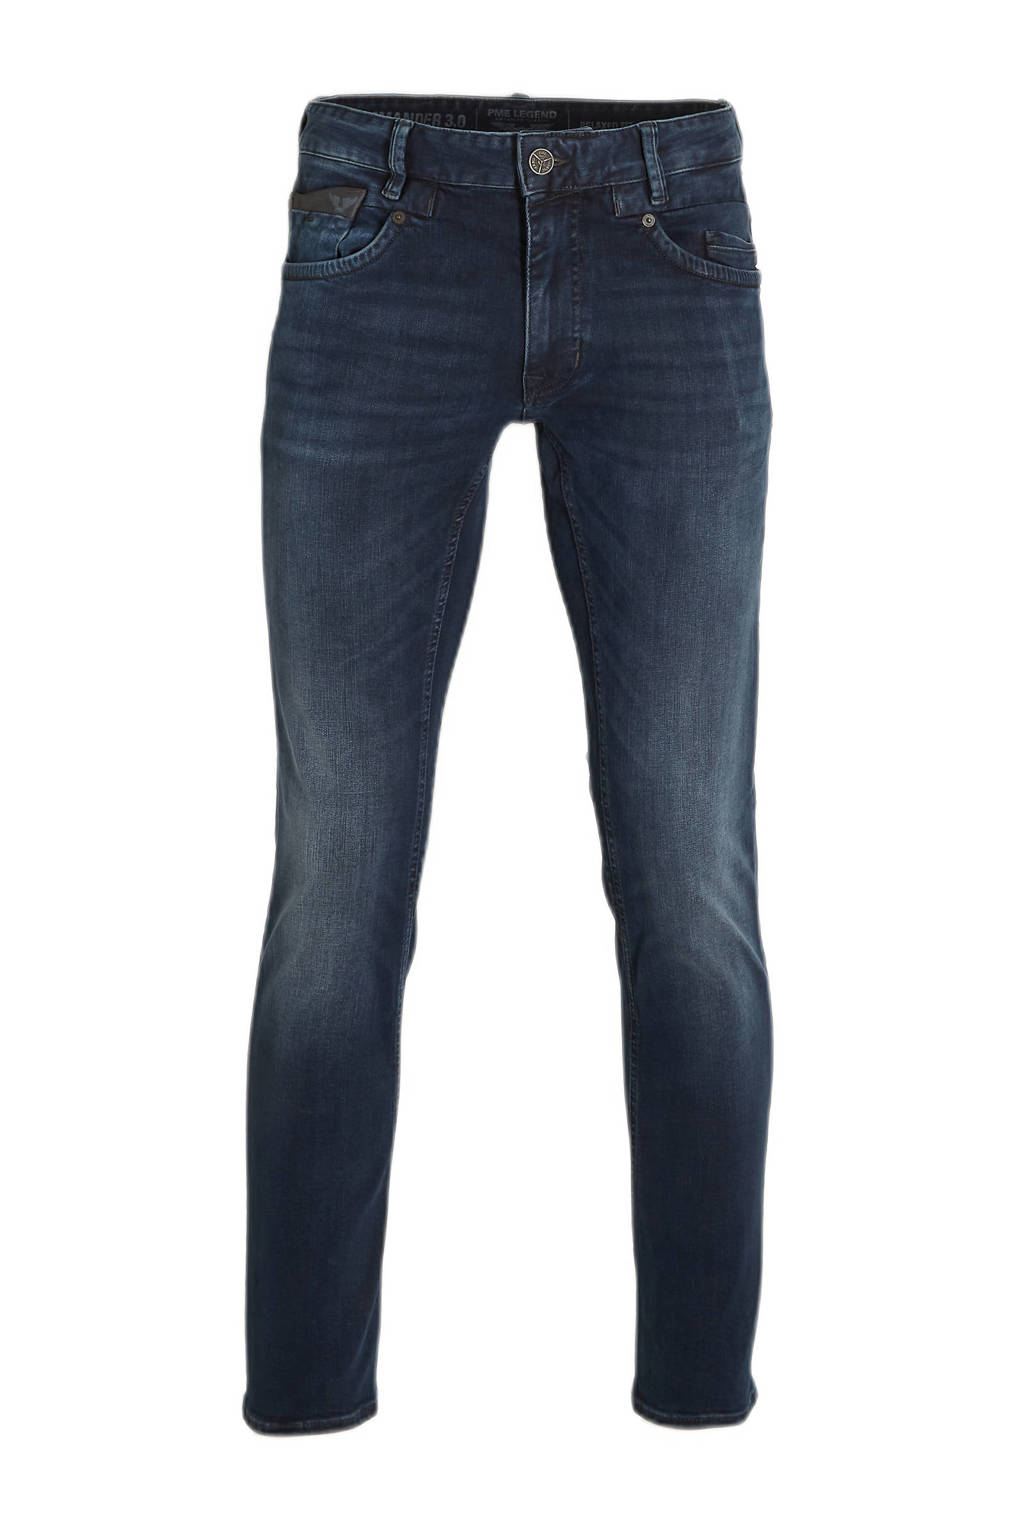 landen filosoof Bonus PME Legend relaxed straight fit jeans Commander 3.0 | wehkamp